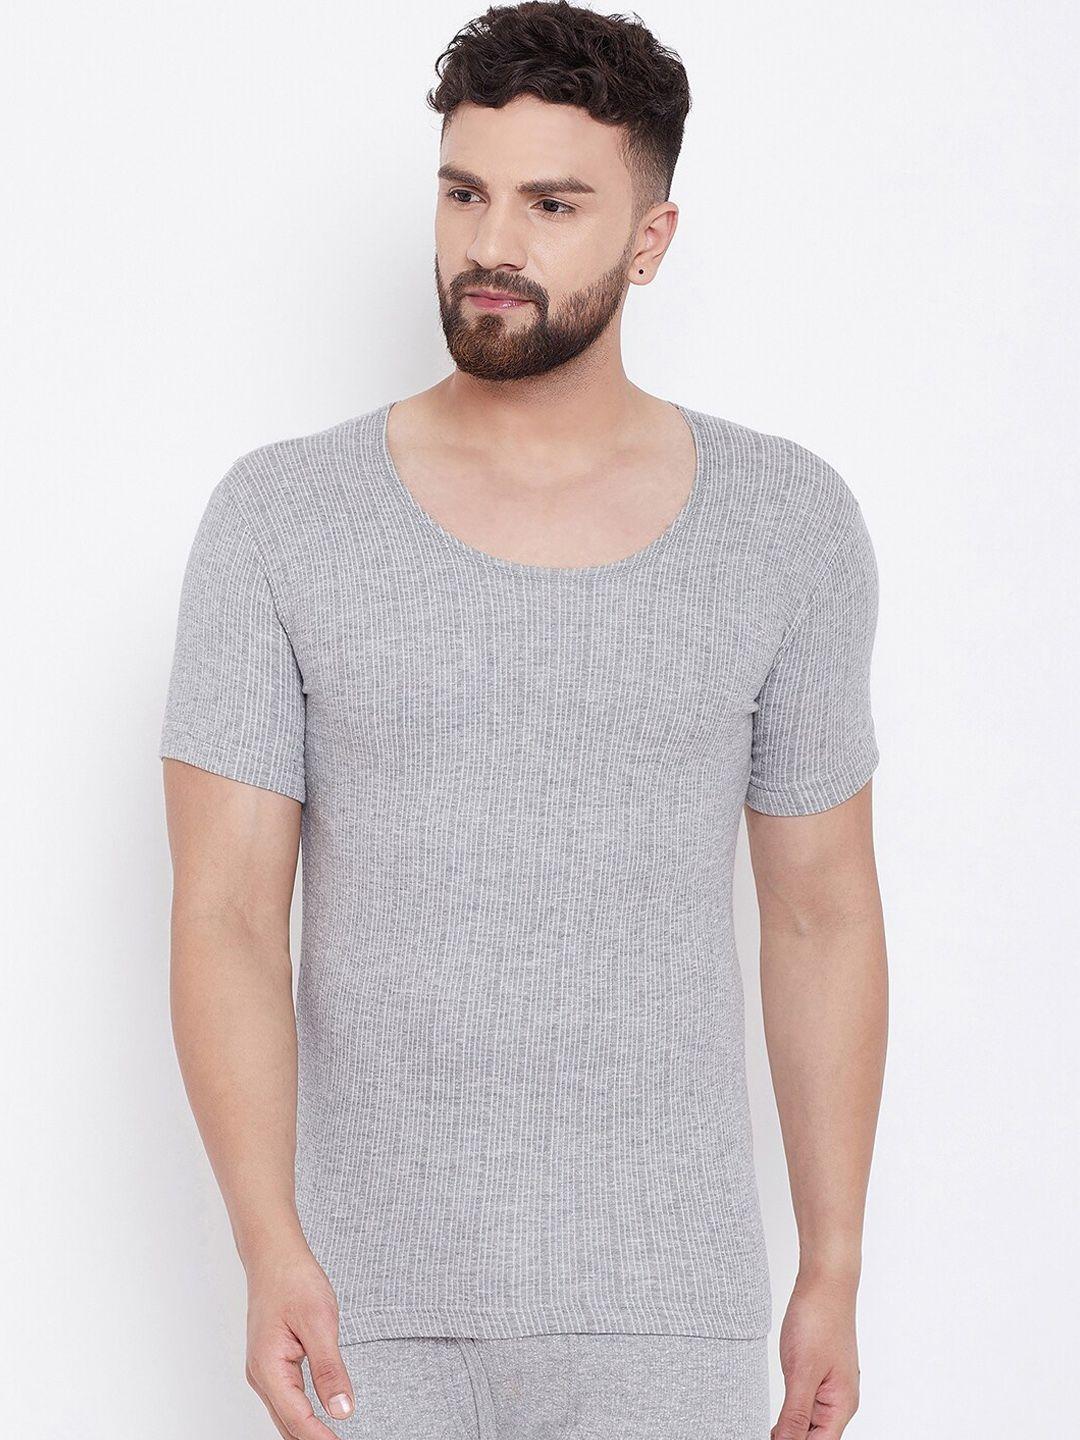 neva-men-grey-striped-thermal-t-shirt